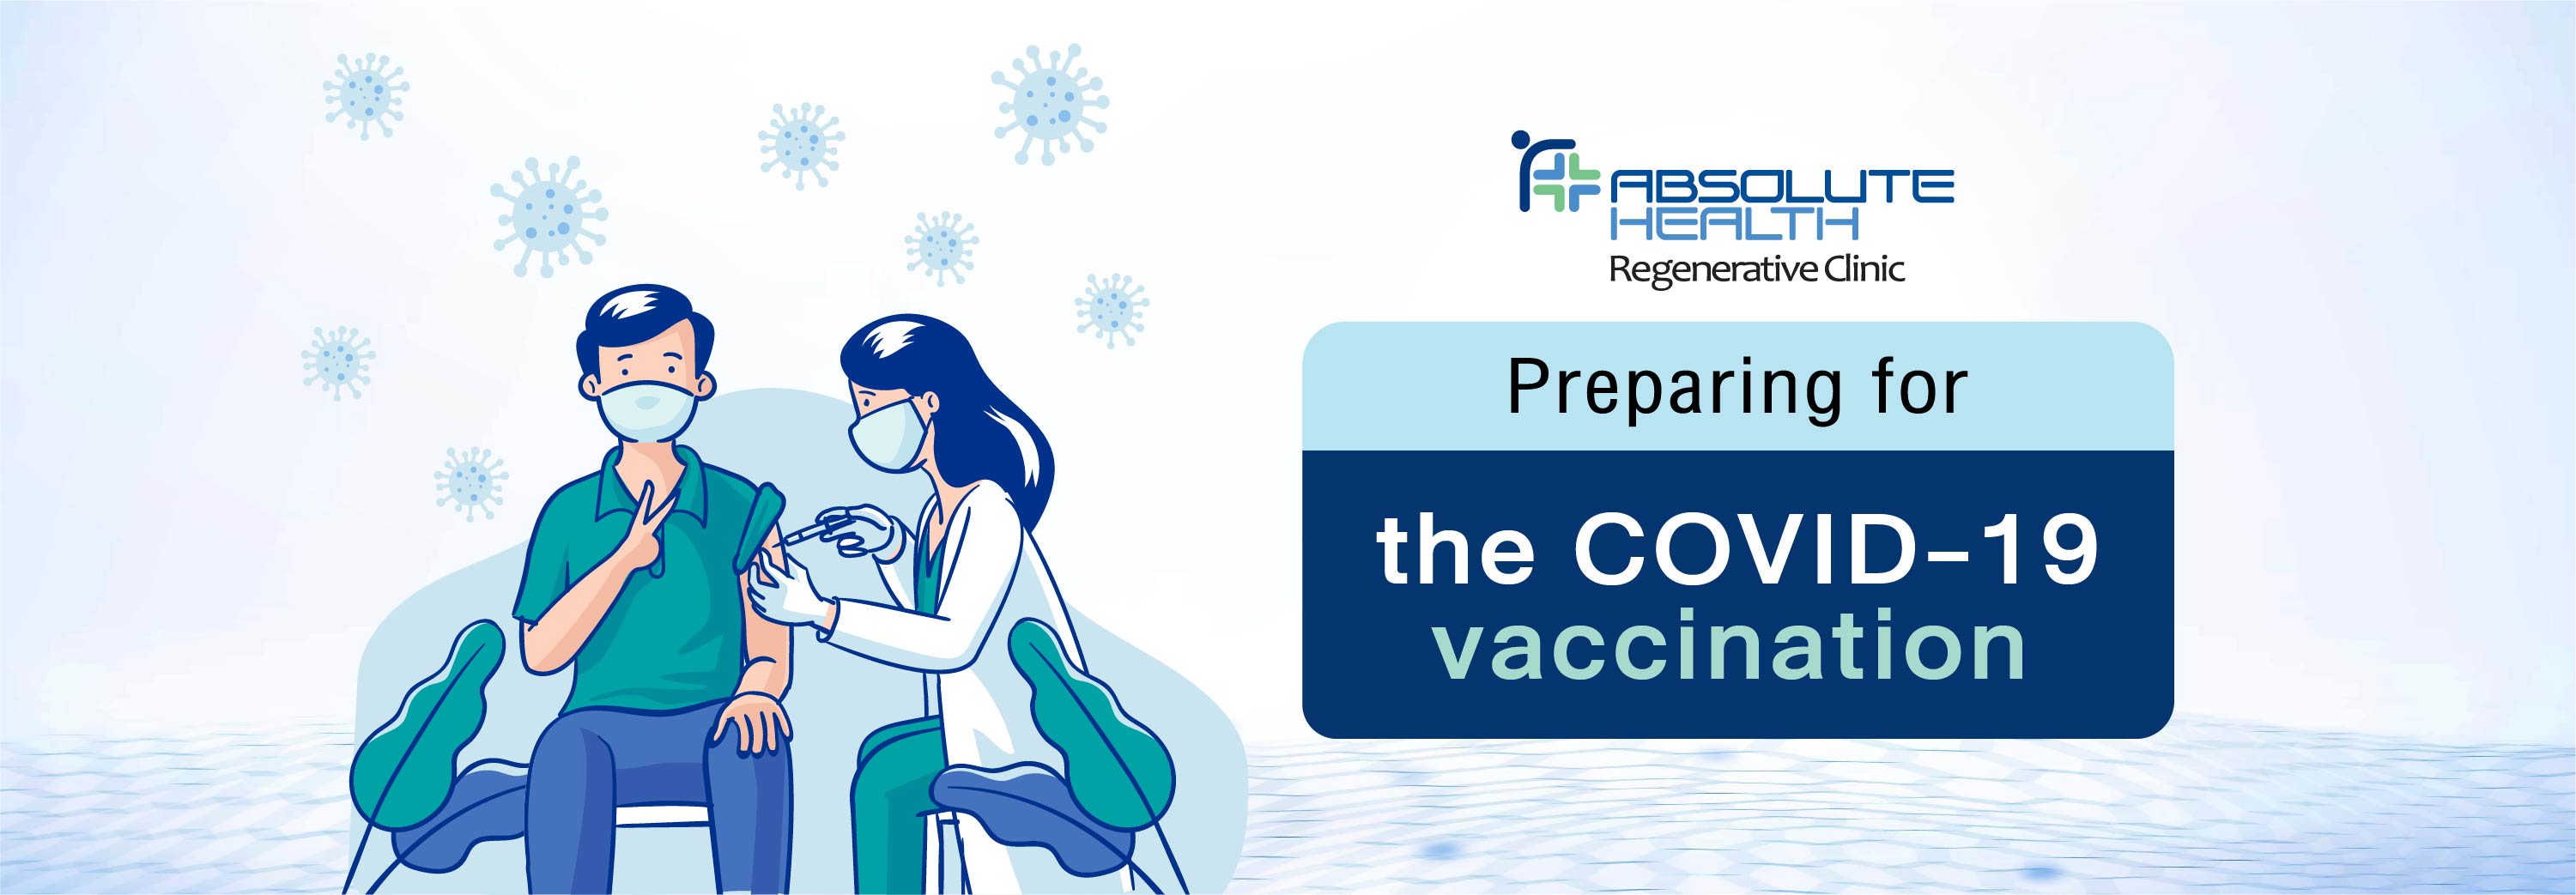 Preparing for the COVID-19 vaccination